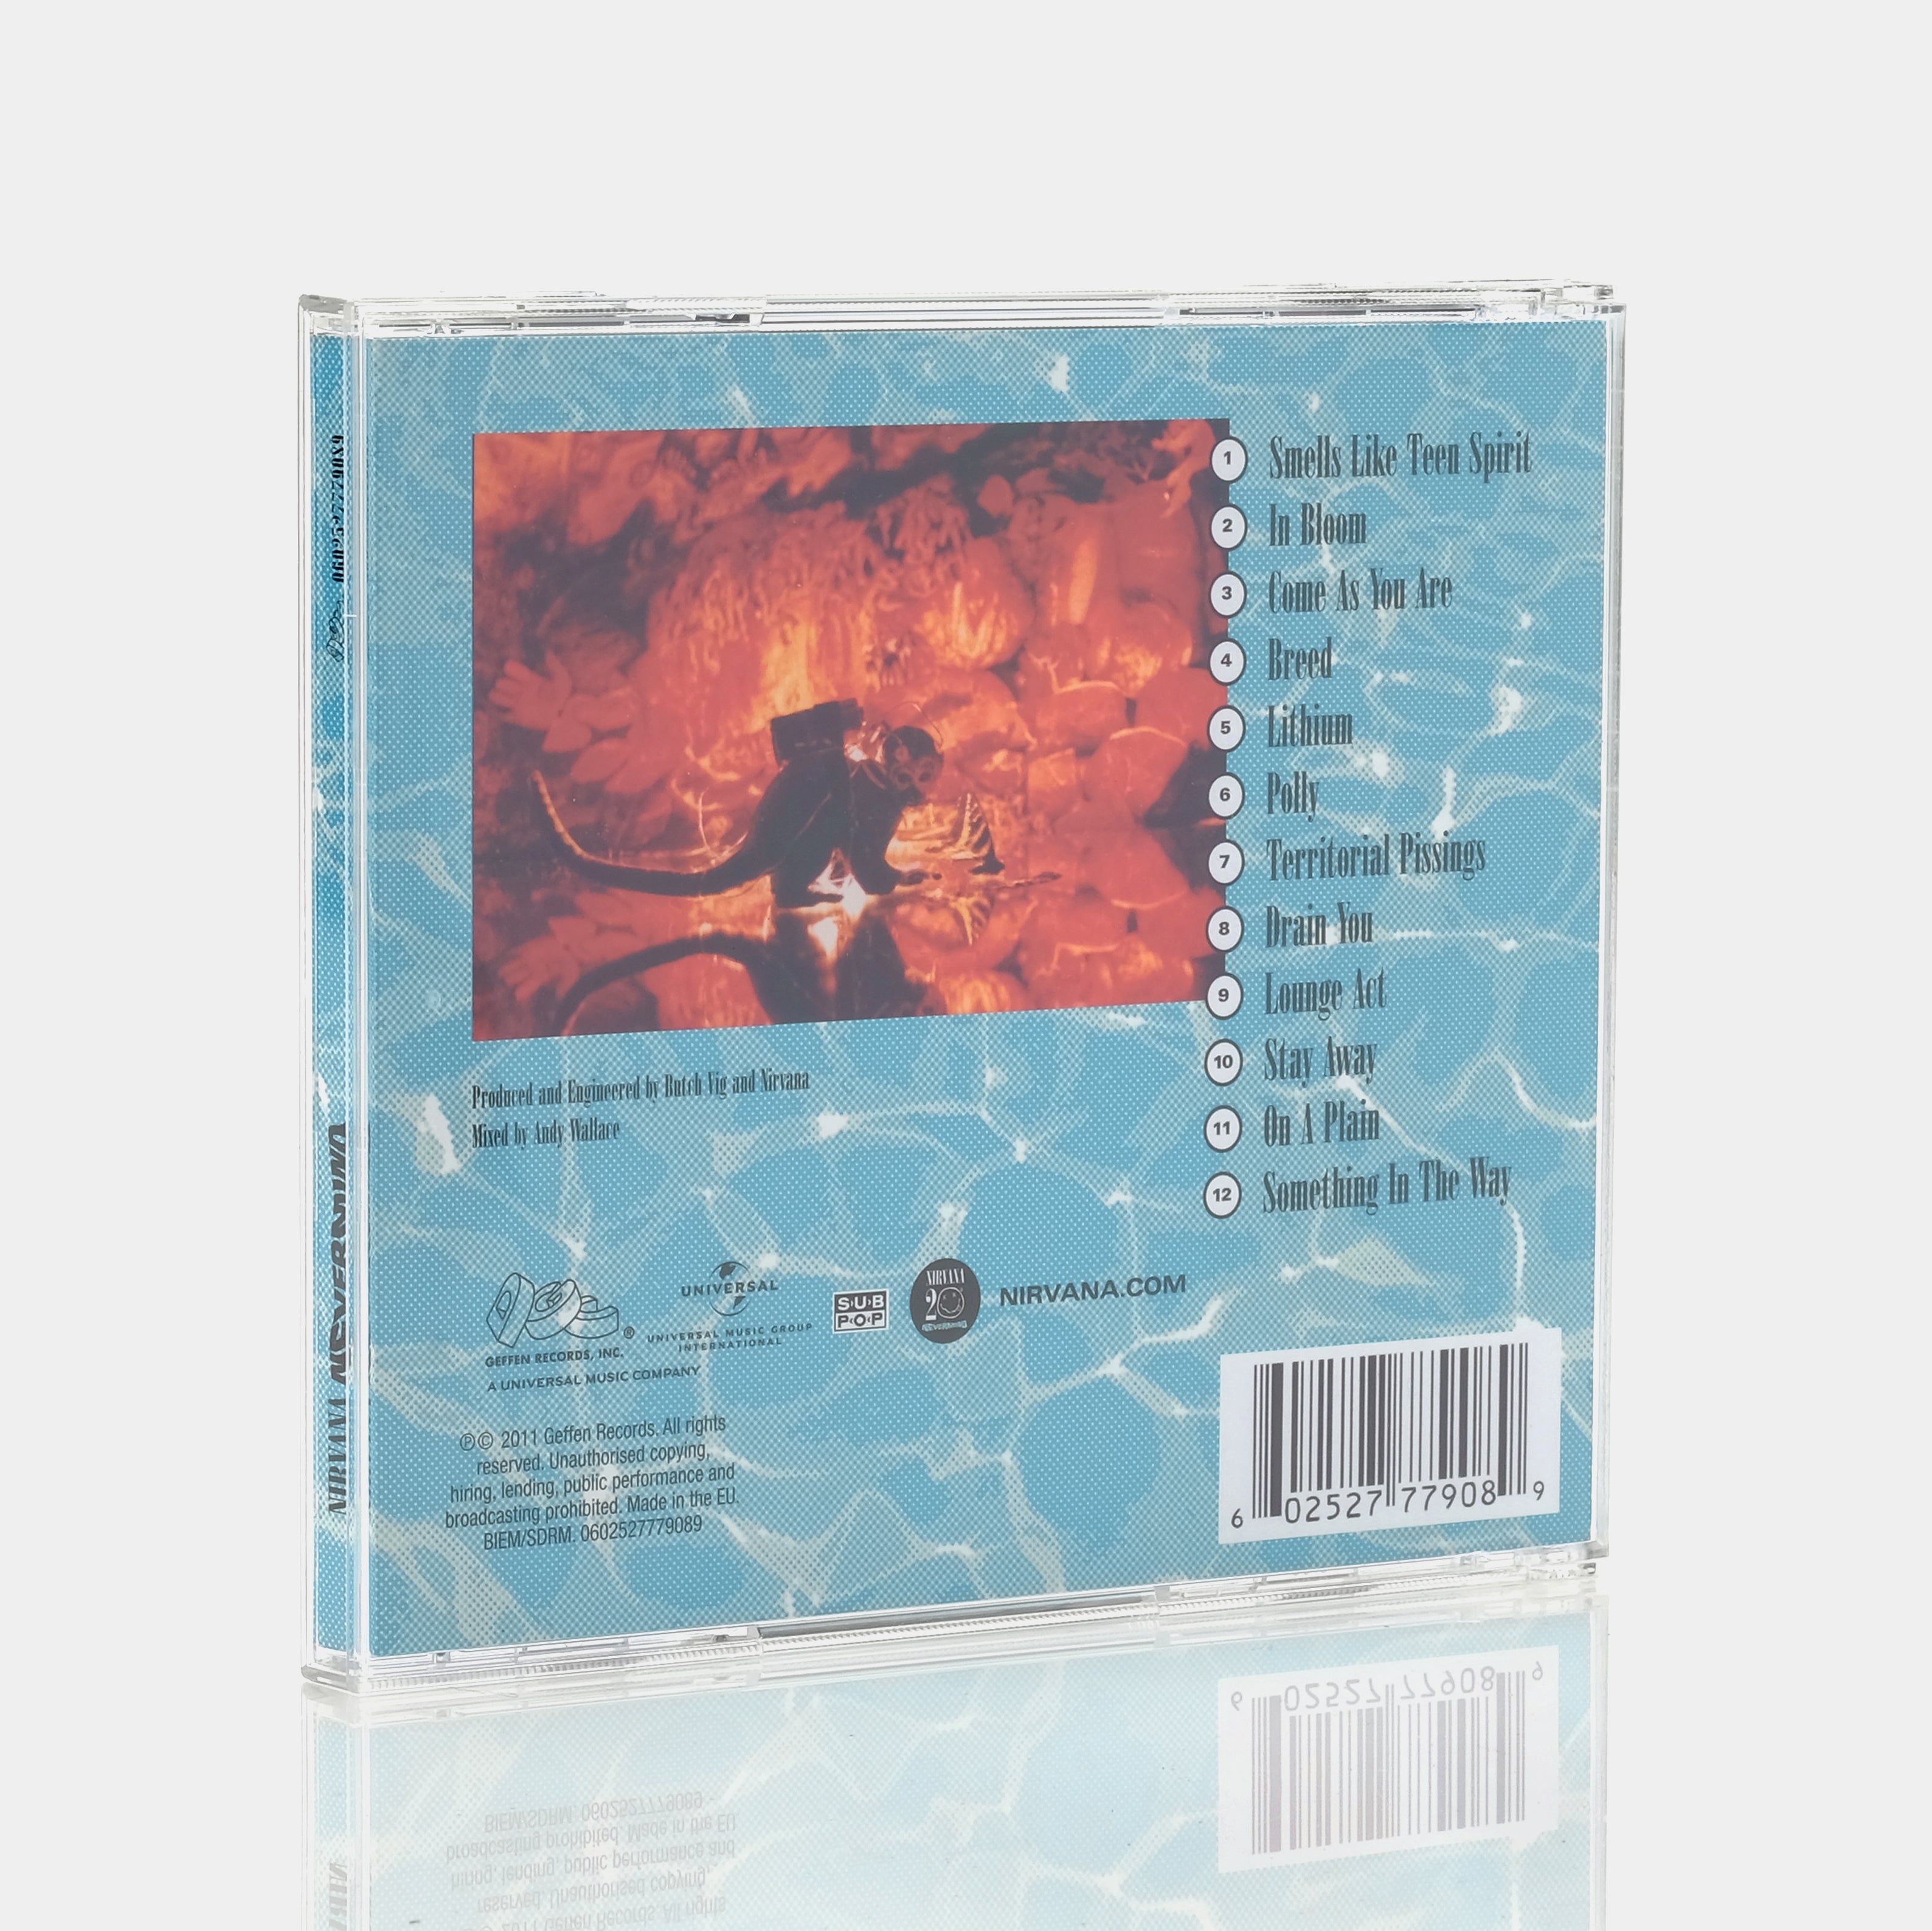 Nirvana - Nevermind (Remastered) CD